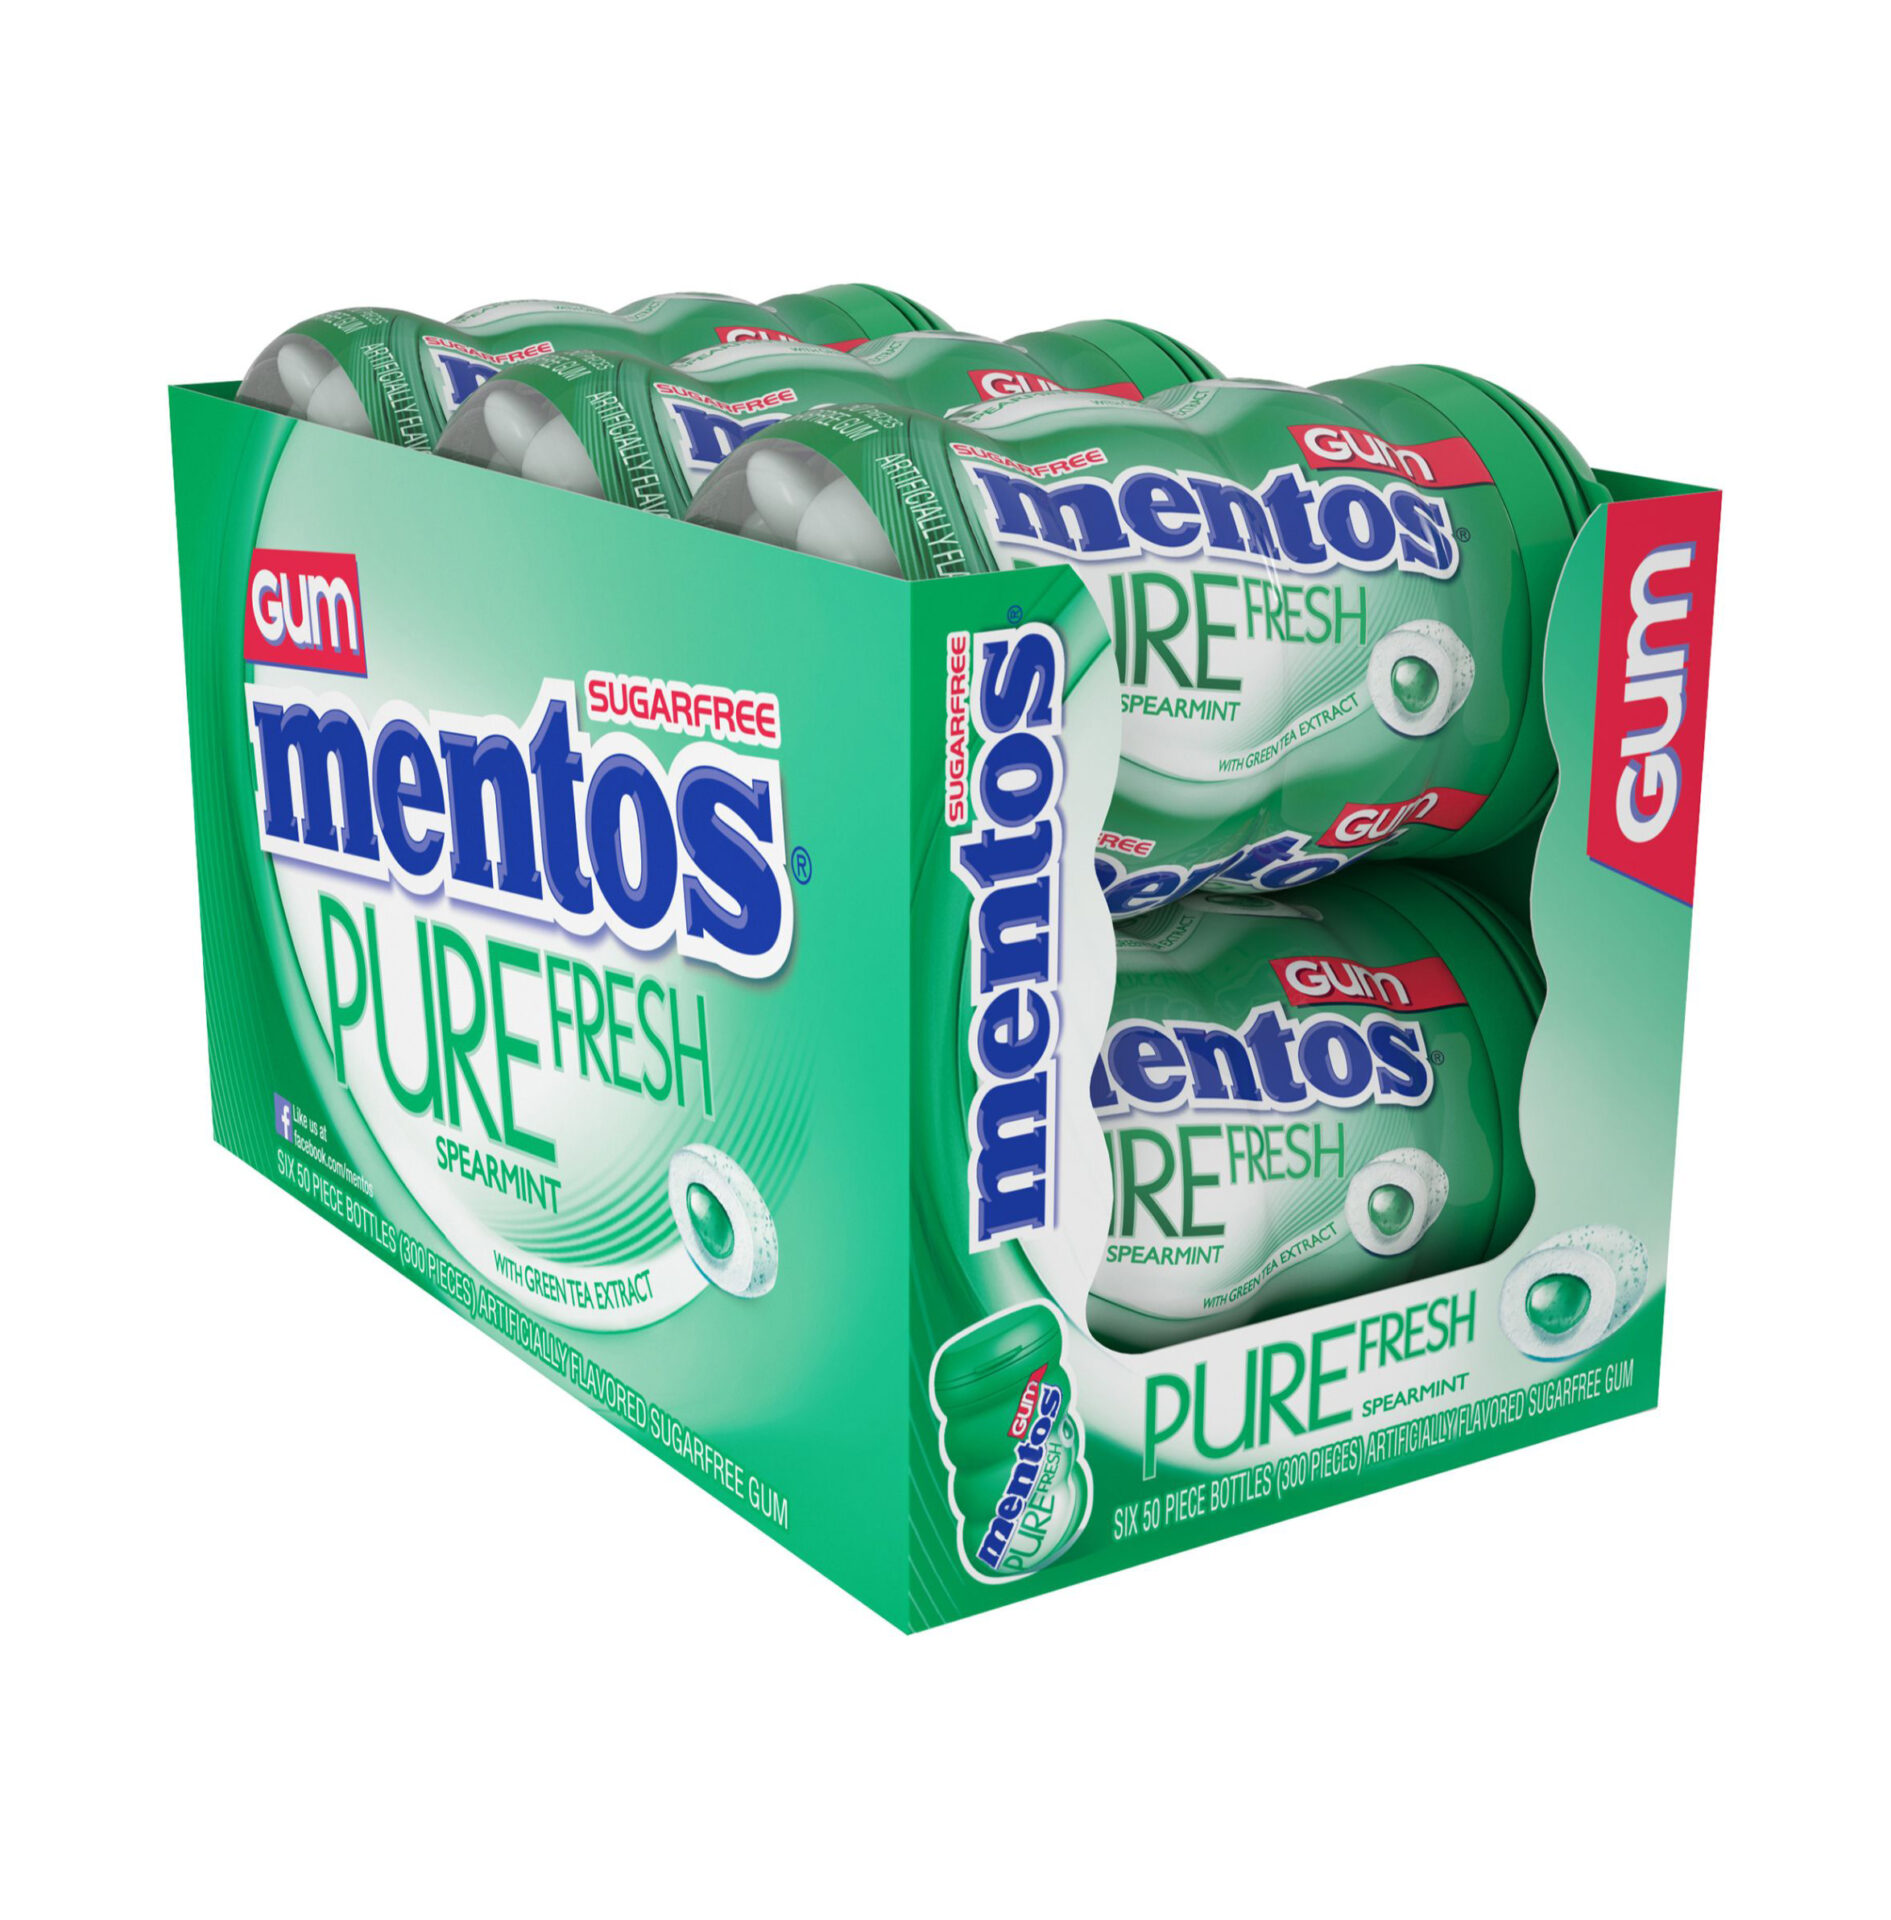 Mentos pure fresh fresh mint, chewing-gum mentos bottle